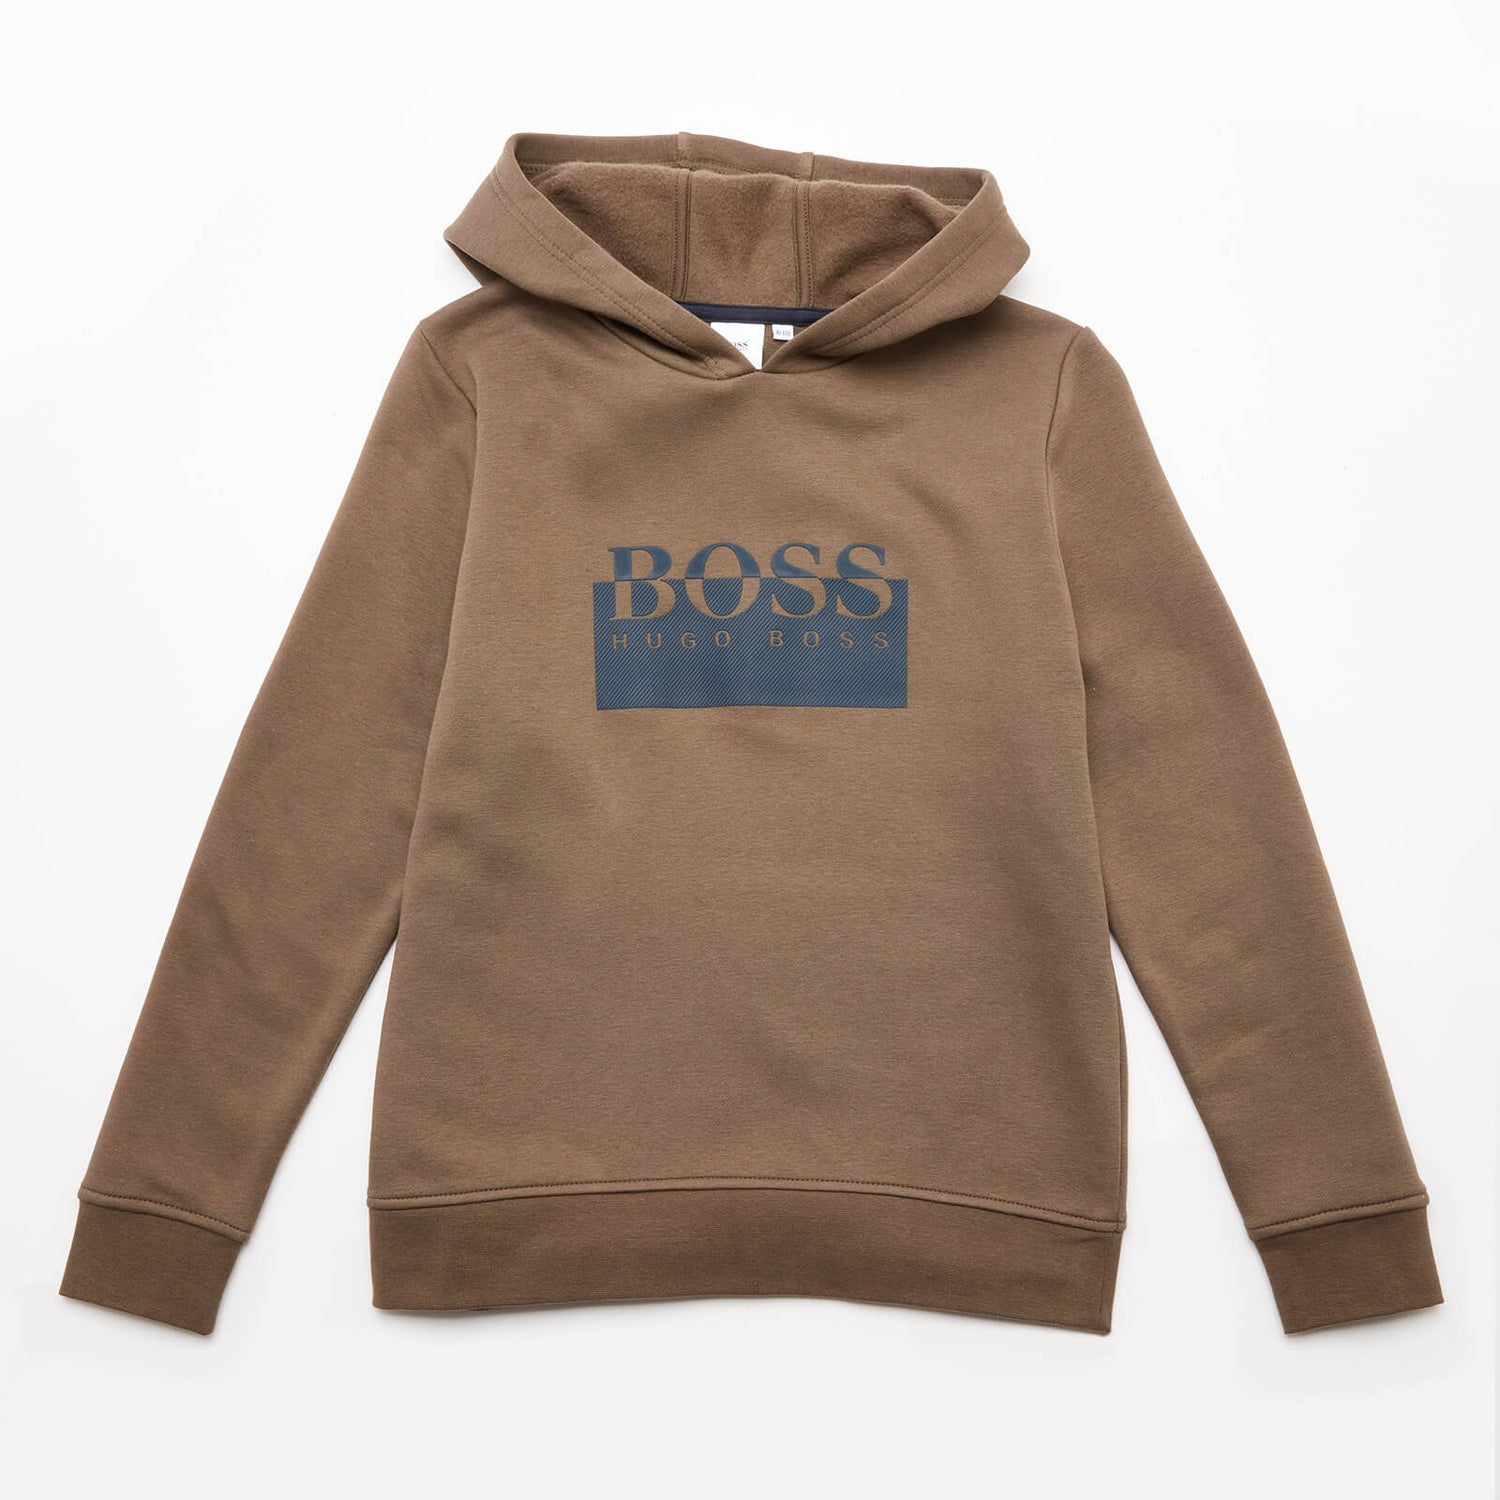 Hugo Boss Kids Hooded Sweatshirt - Khaki - 10 Years